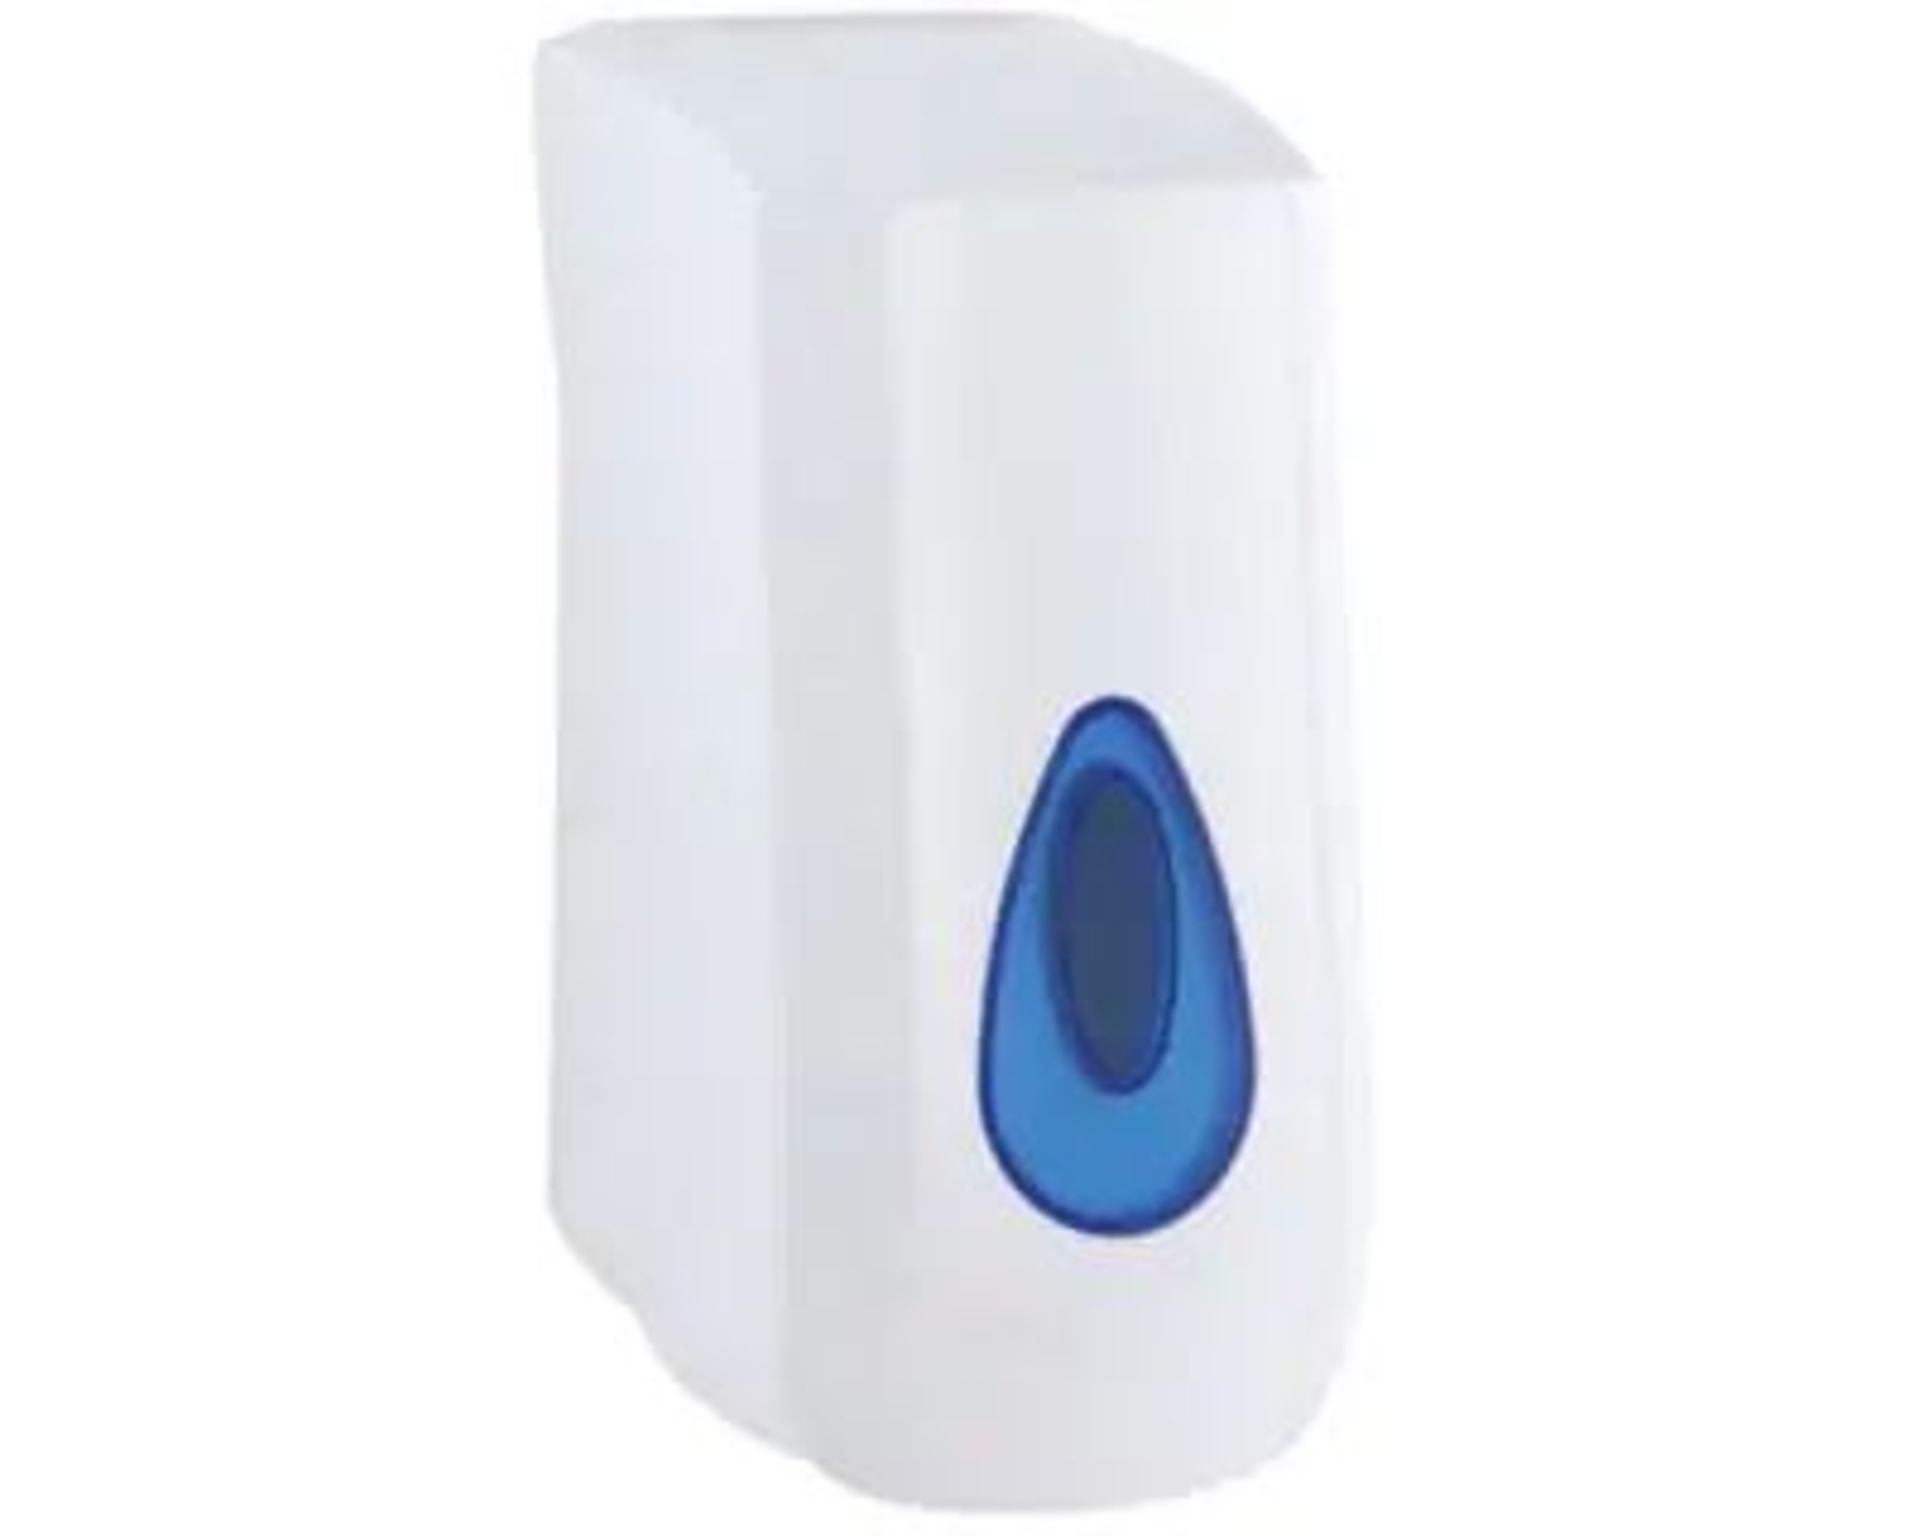 7 x Modular 2L Refillable Liquid Soap Dispenser w\Blue Teardrop. - ER51. RRP £35.00 each